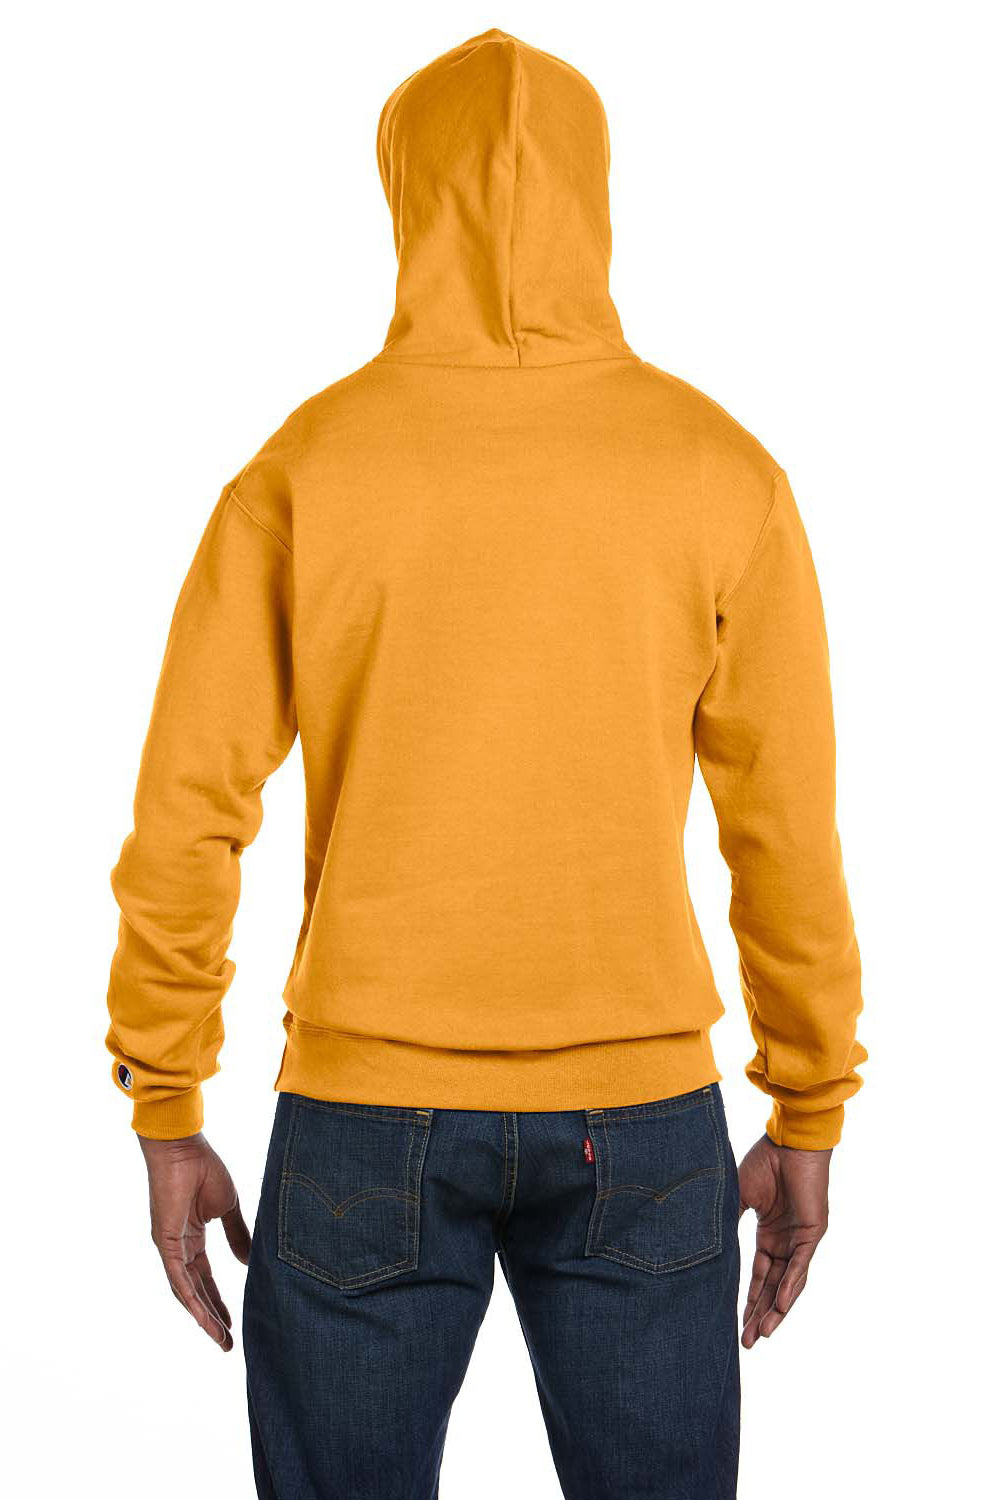 Champion S700 Mens Double Dry Eco Moisture Wicking Fleece Hooded Sweatshirt Hoodie Gold Back